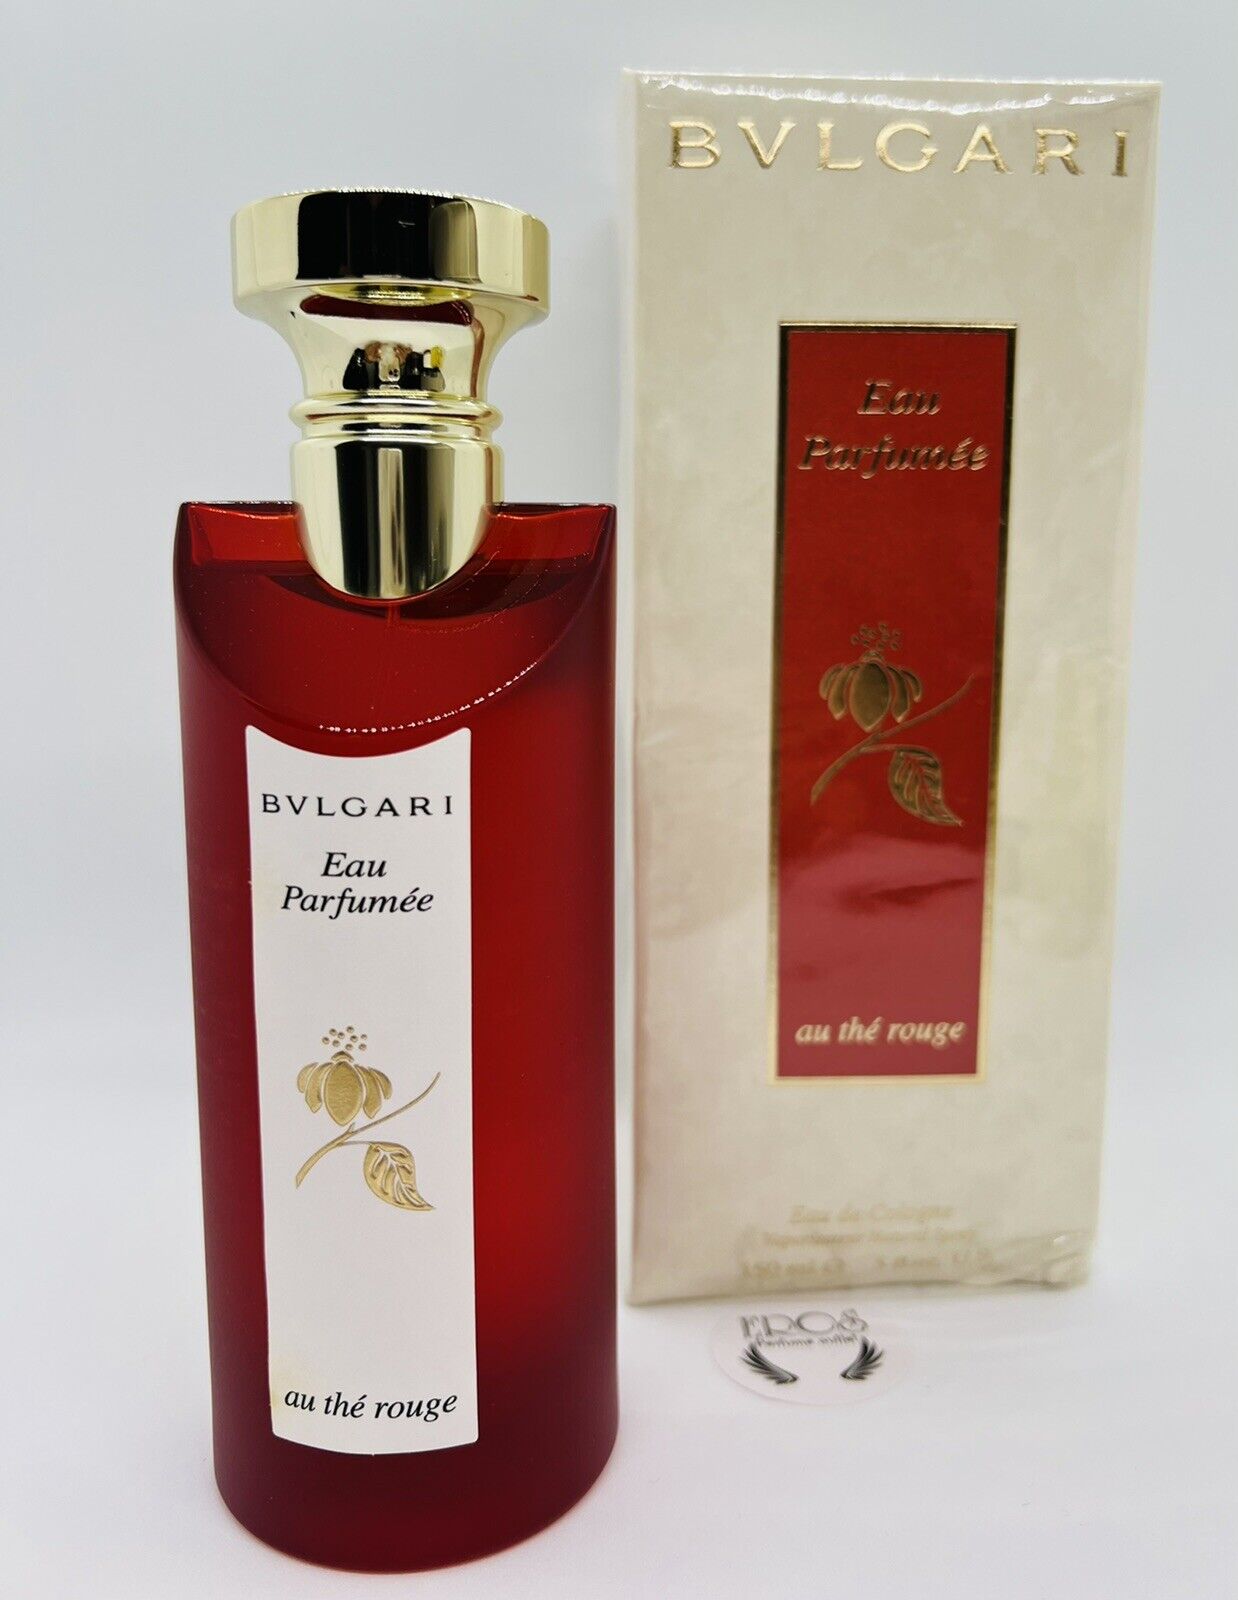 Bvlgari Eau Parfumee Au The Rouge Eau De Cologne Spray 5 oz /150 ml Sealed Box